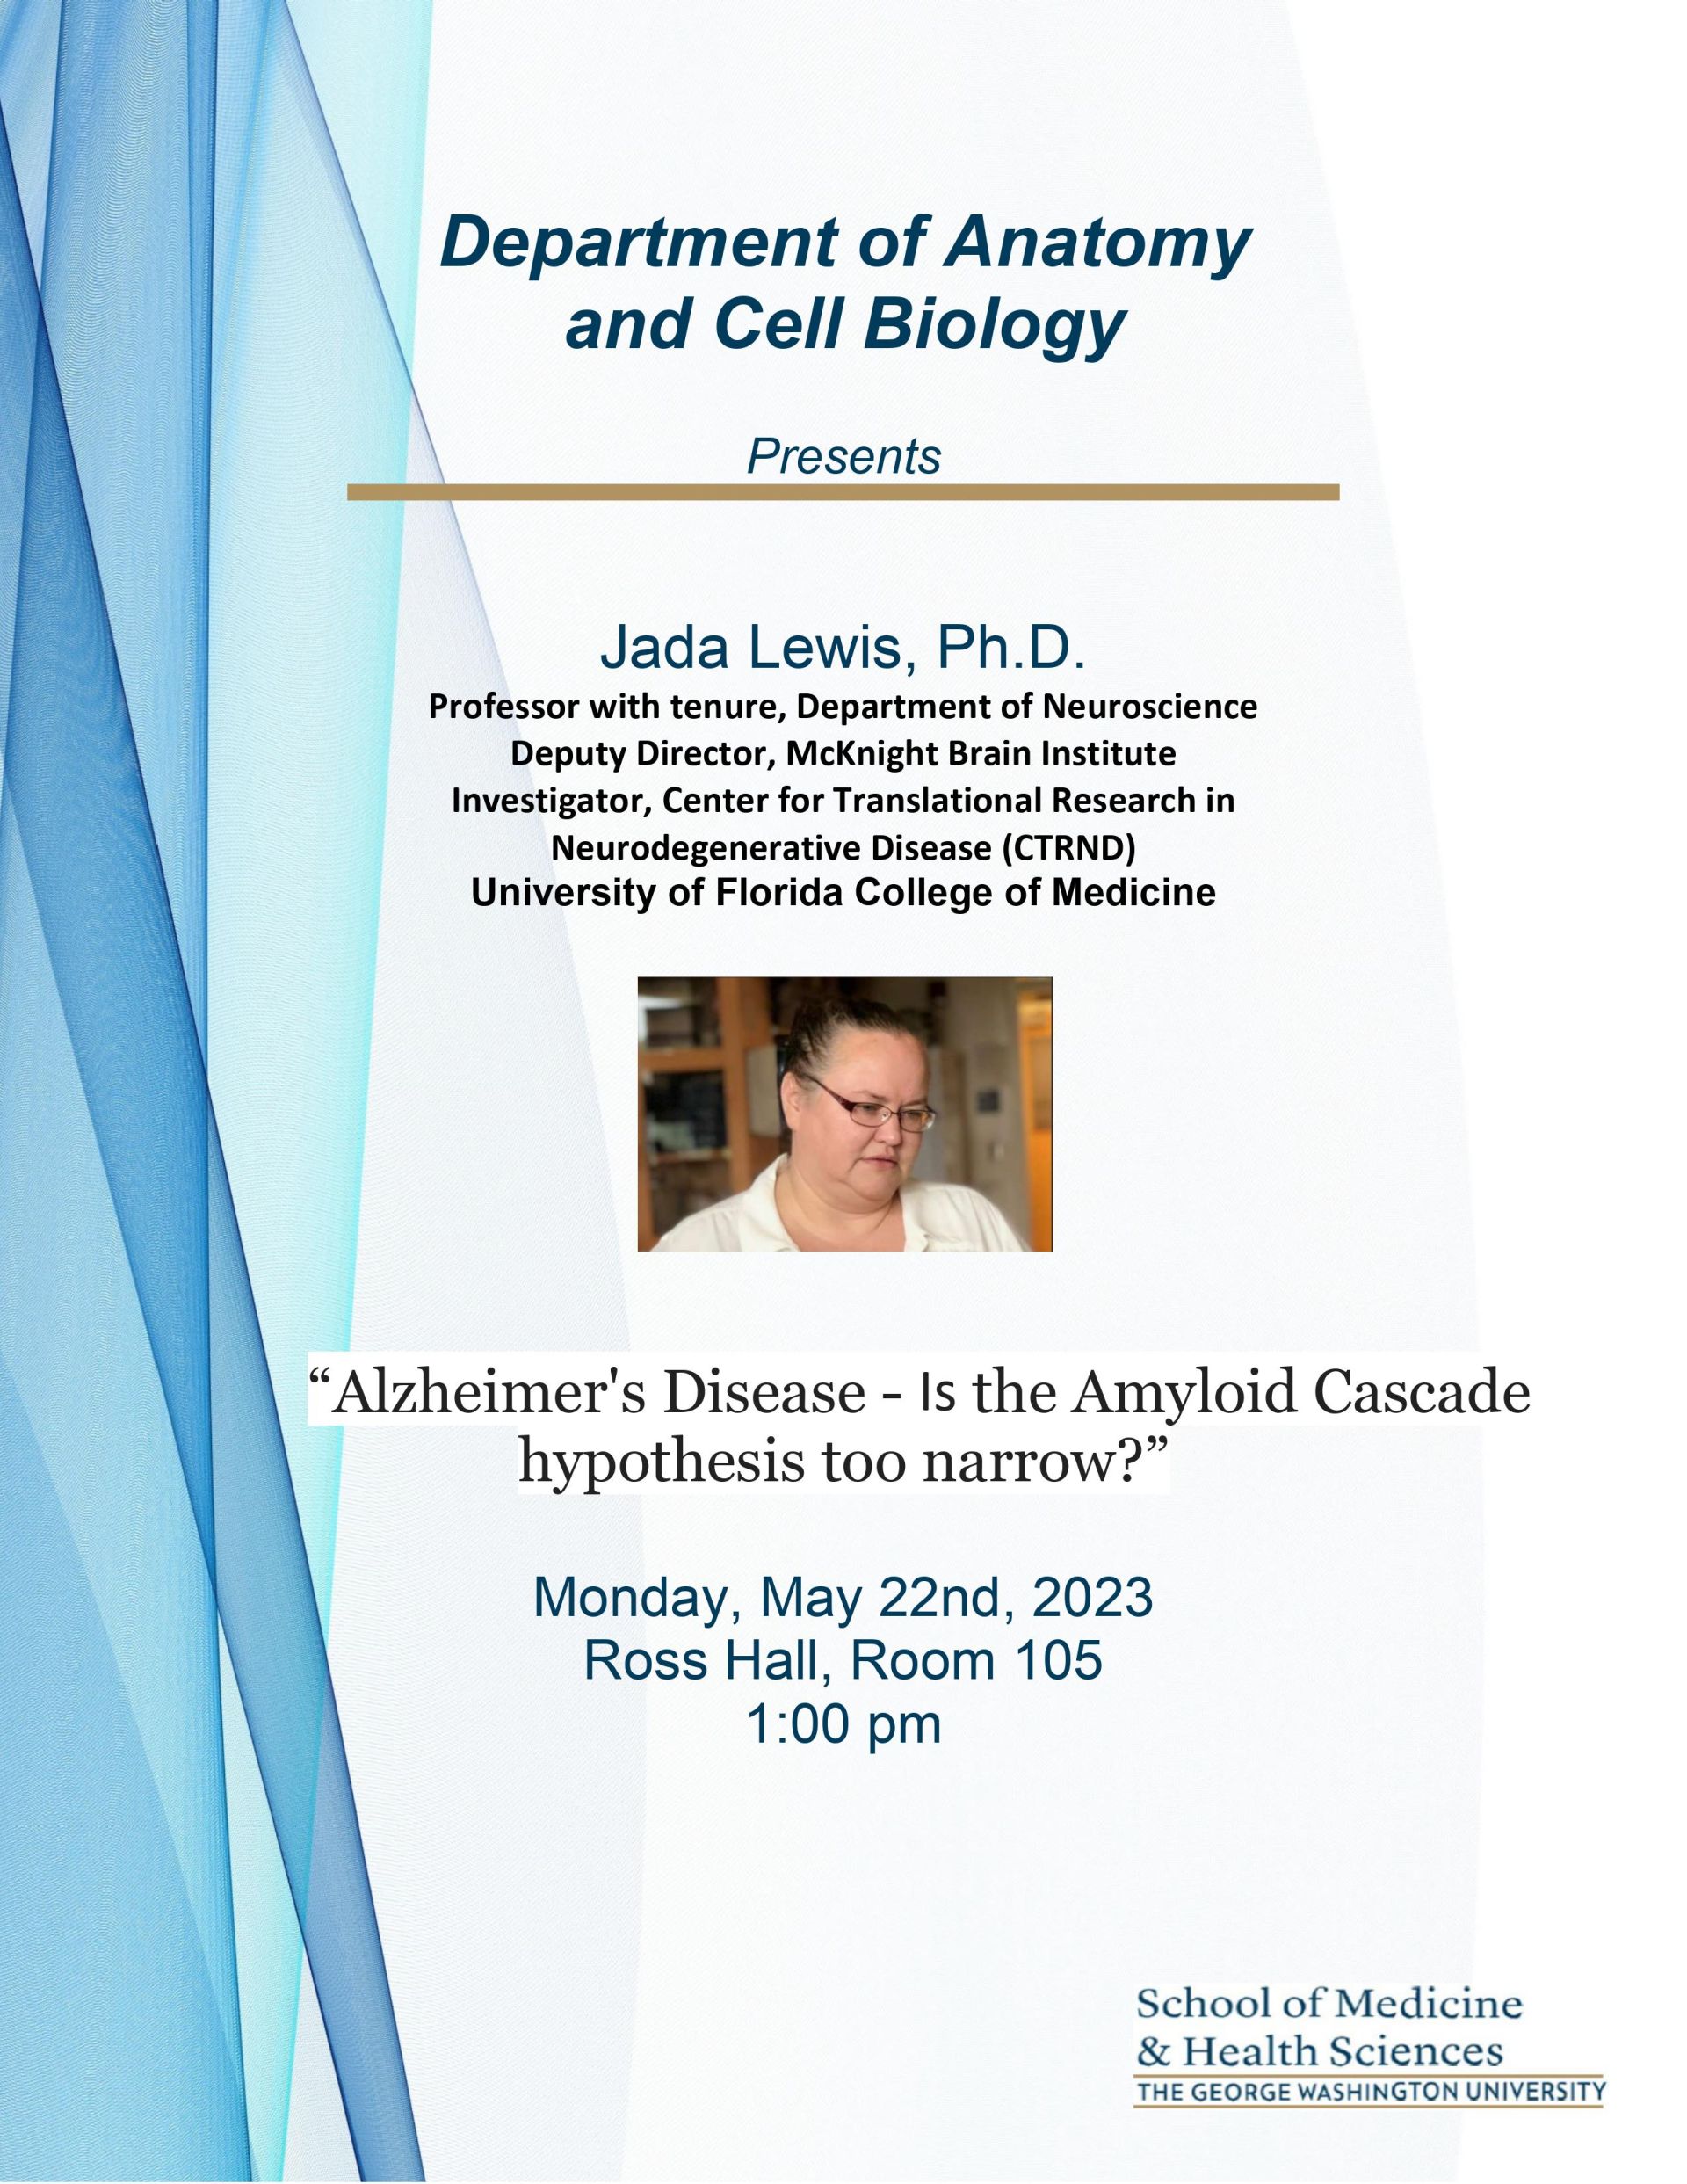 Dr. Jada Lewis presents a talk on Alzheimer's disease 